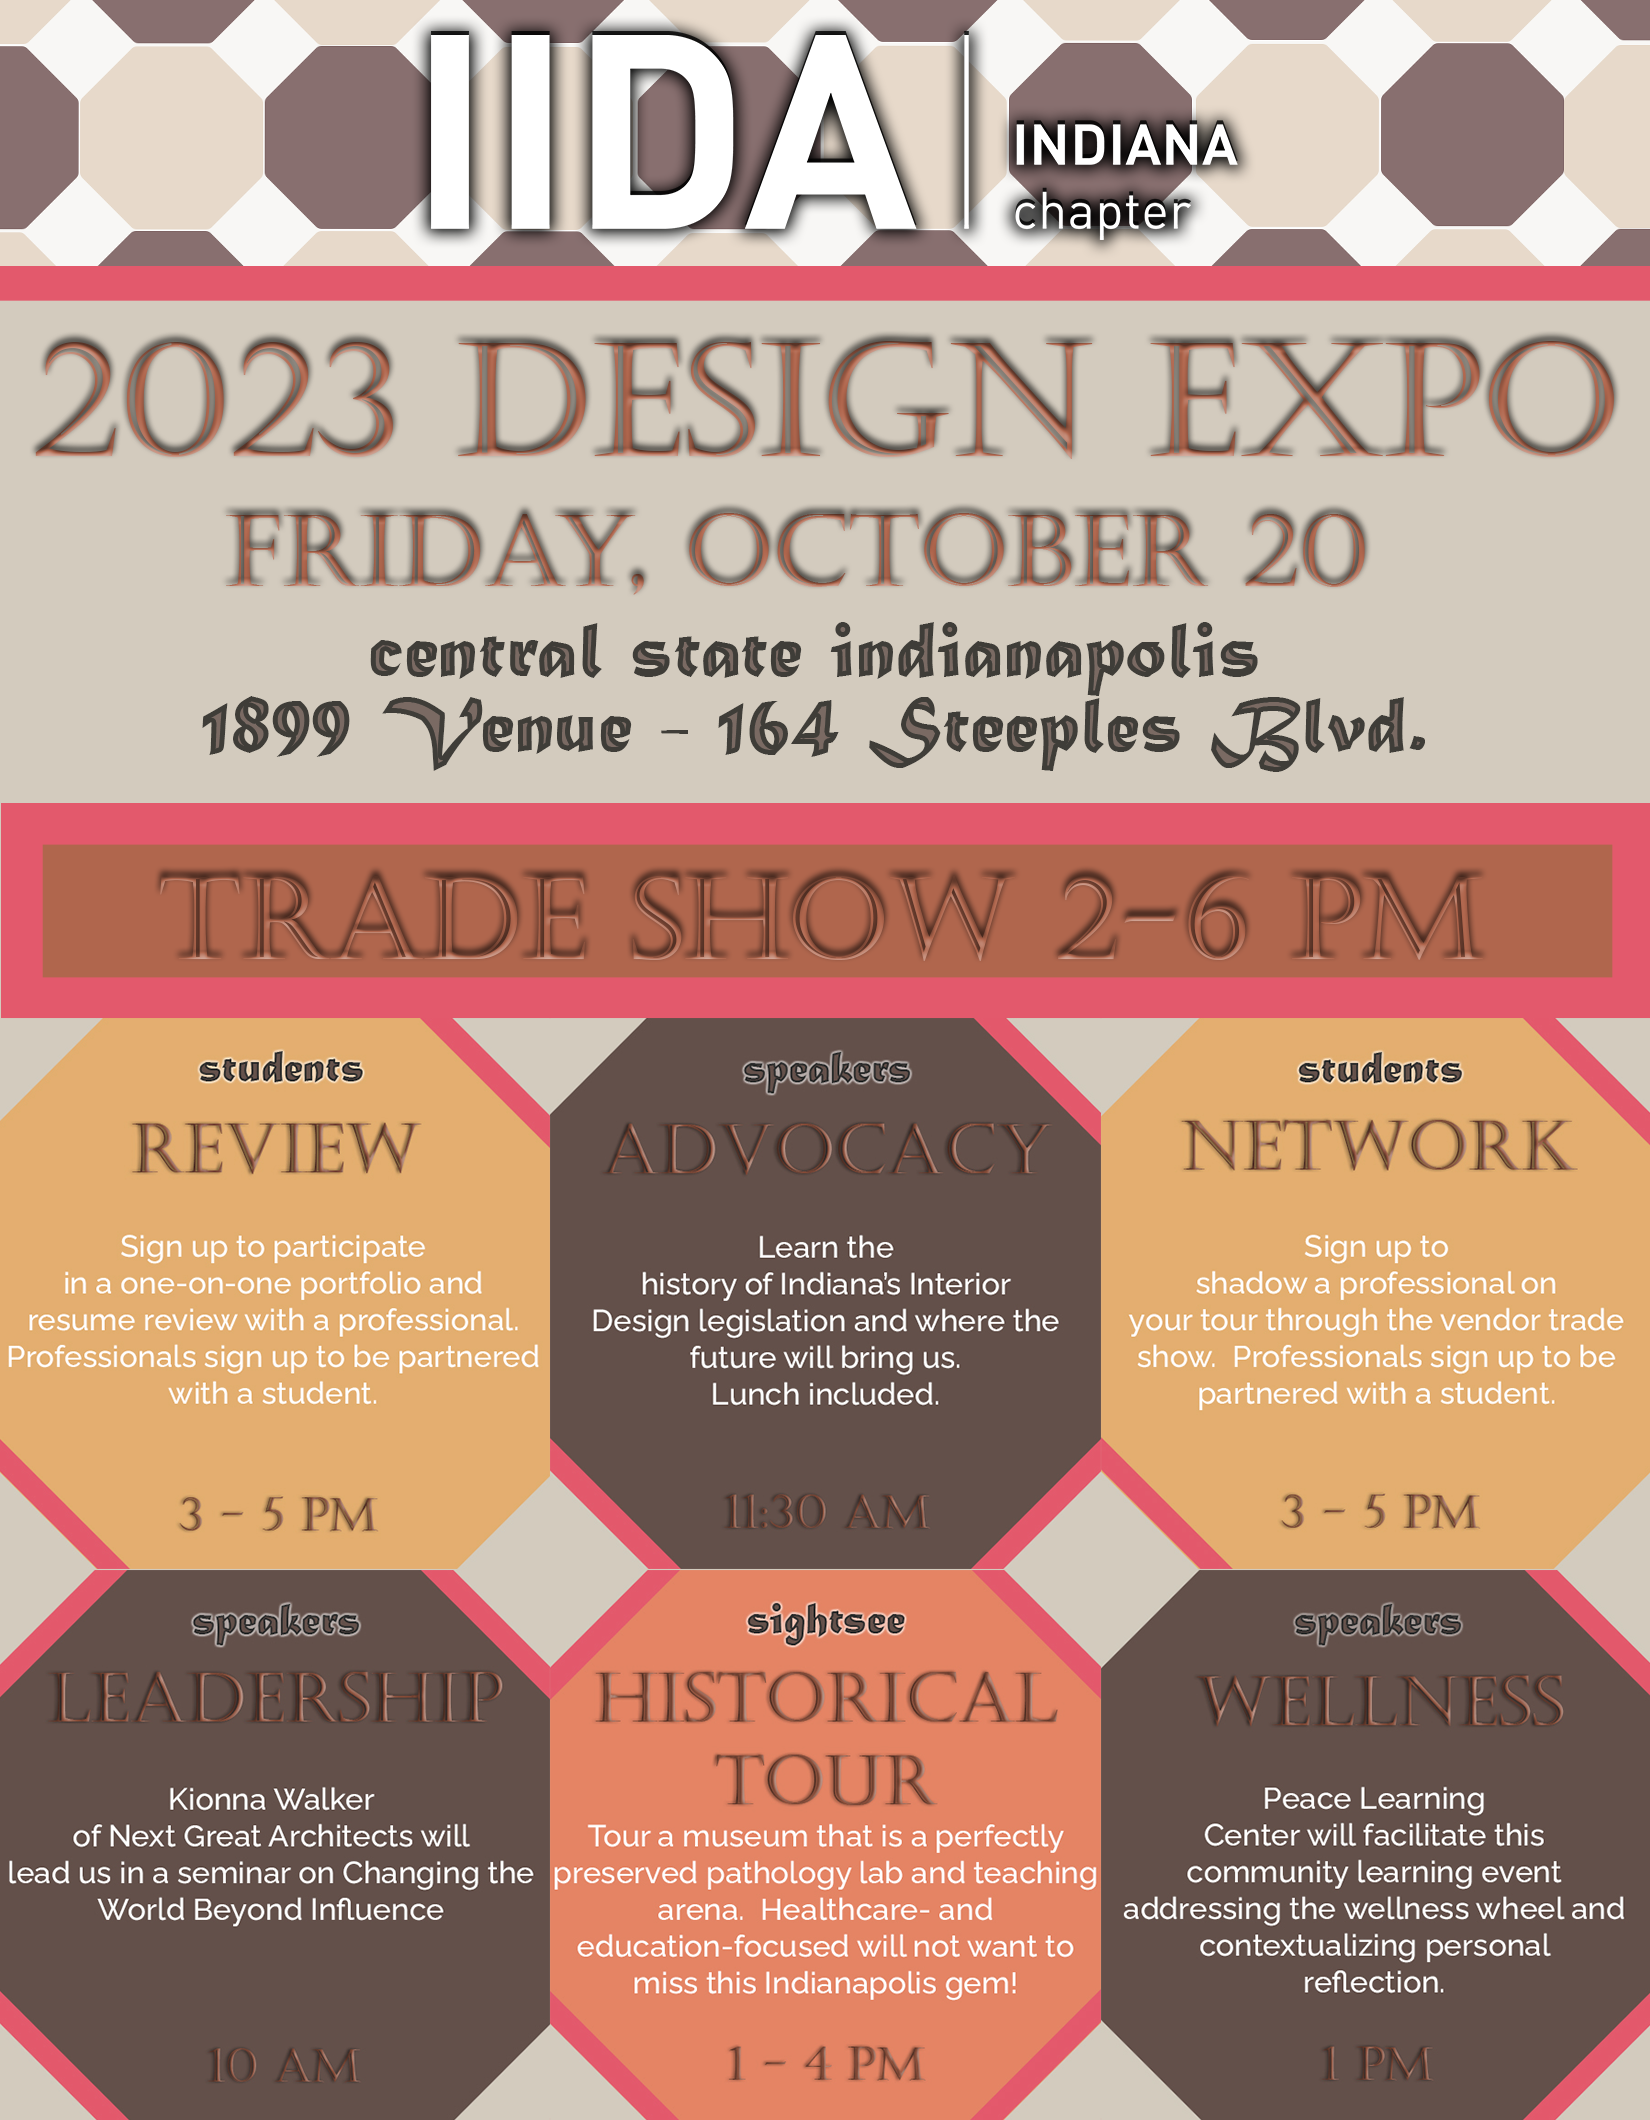 Design Expo Information